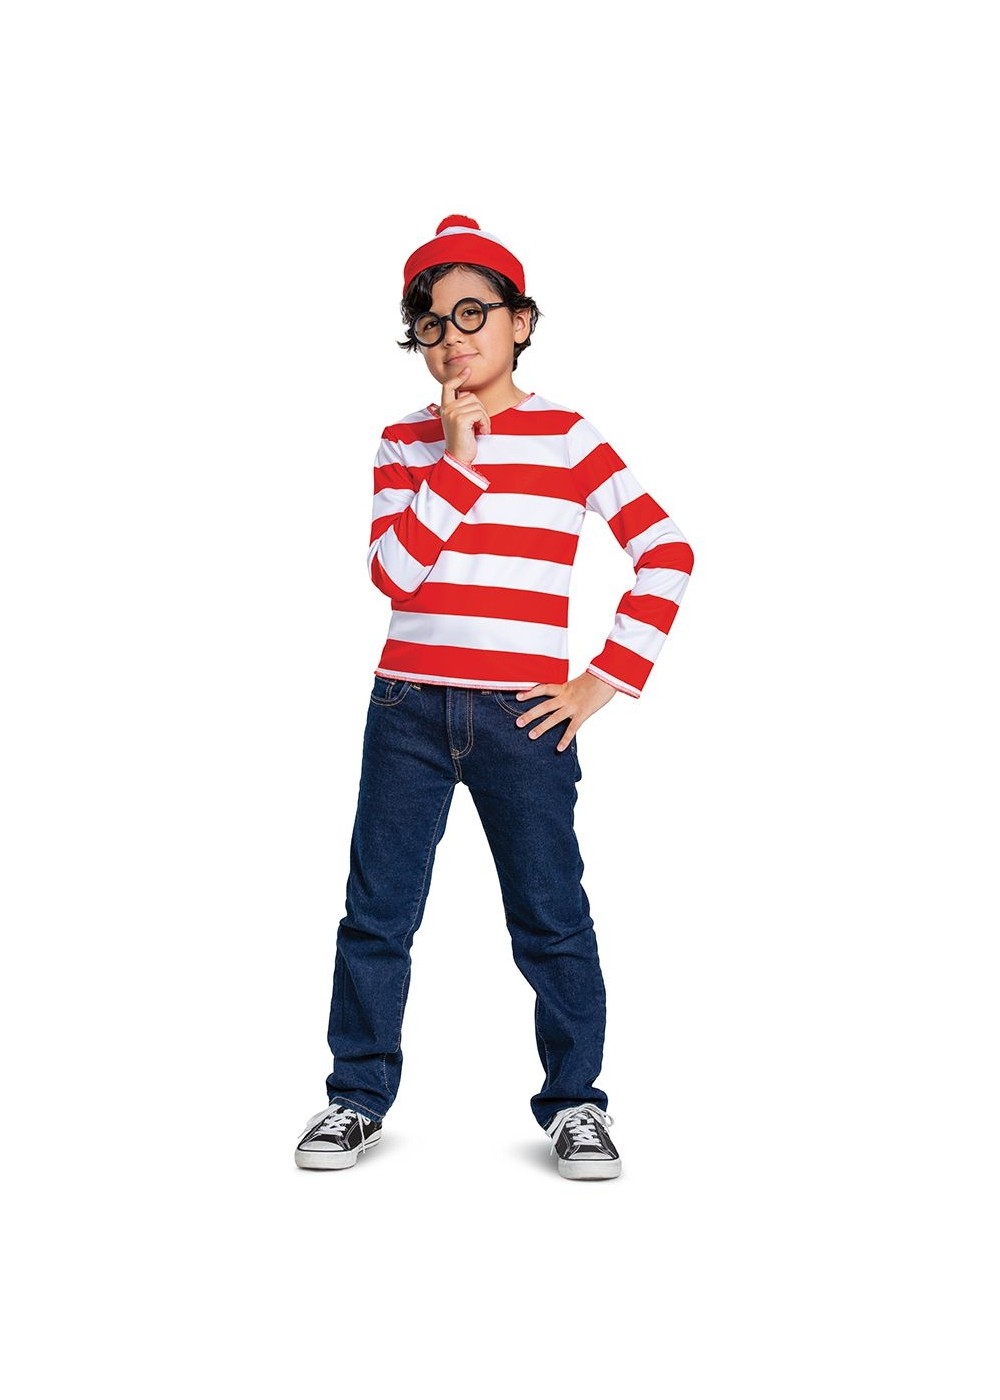 Waldo Boys Costume